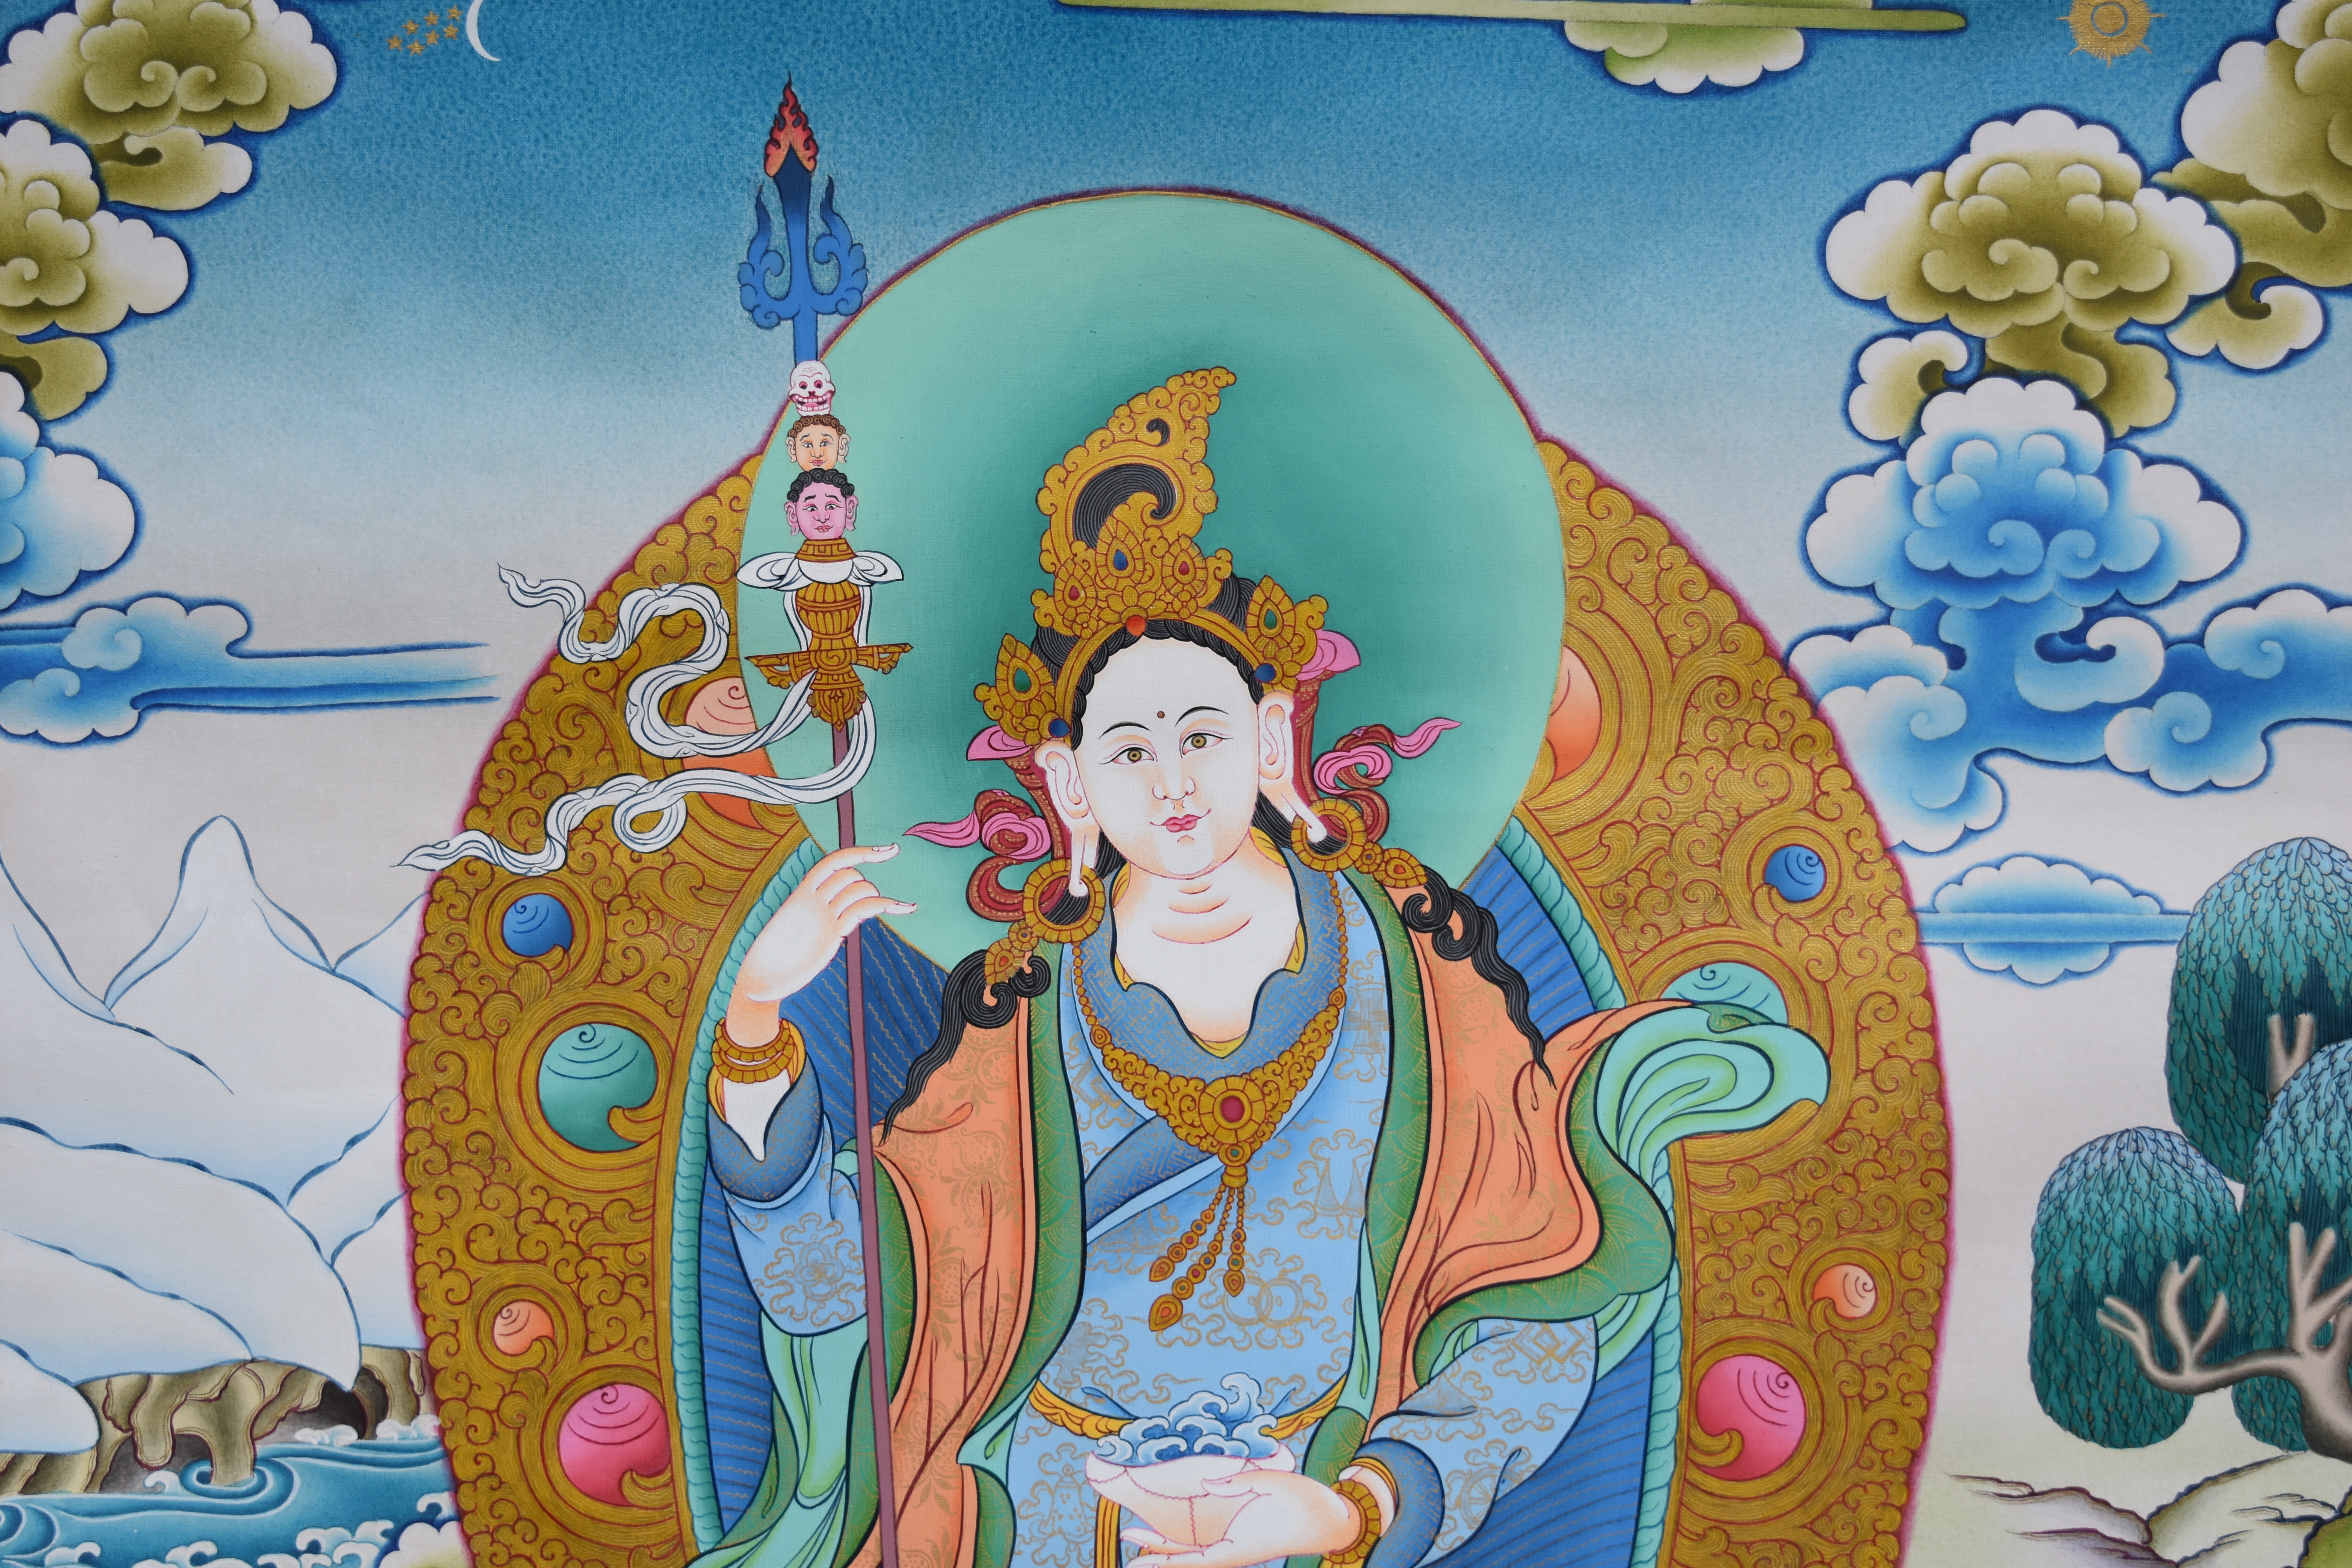 The Heart Essence of the Khadros with Chaphur Rinpoche མཁའ་འགྲོའི་ཉམས་རྒྱུད།